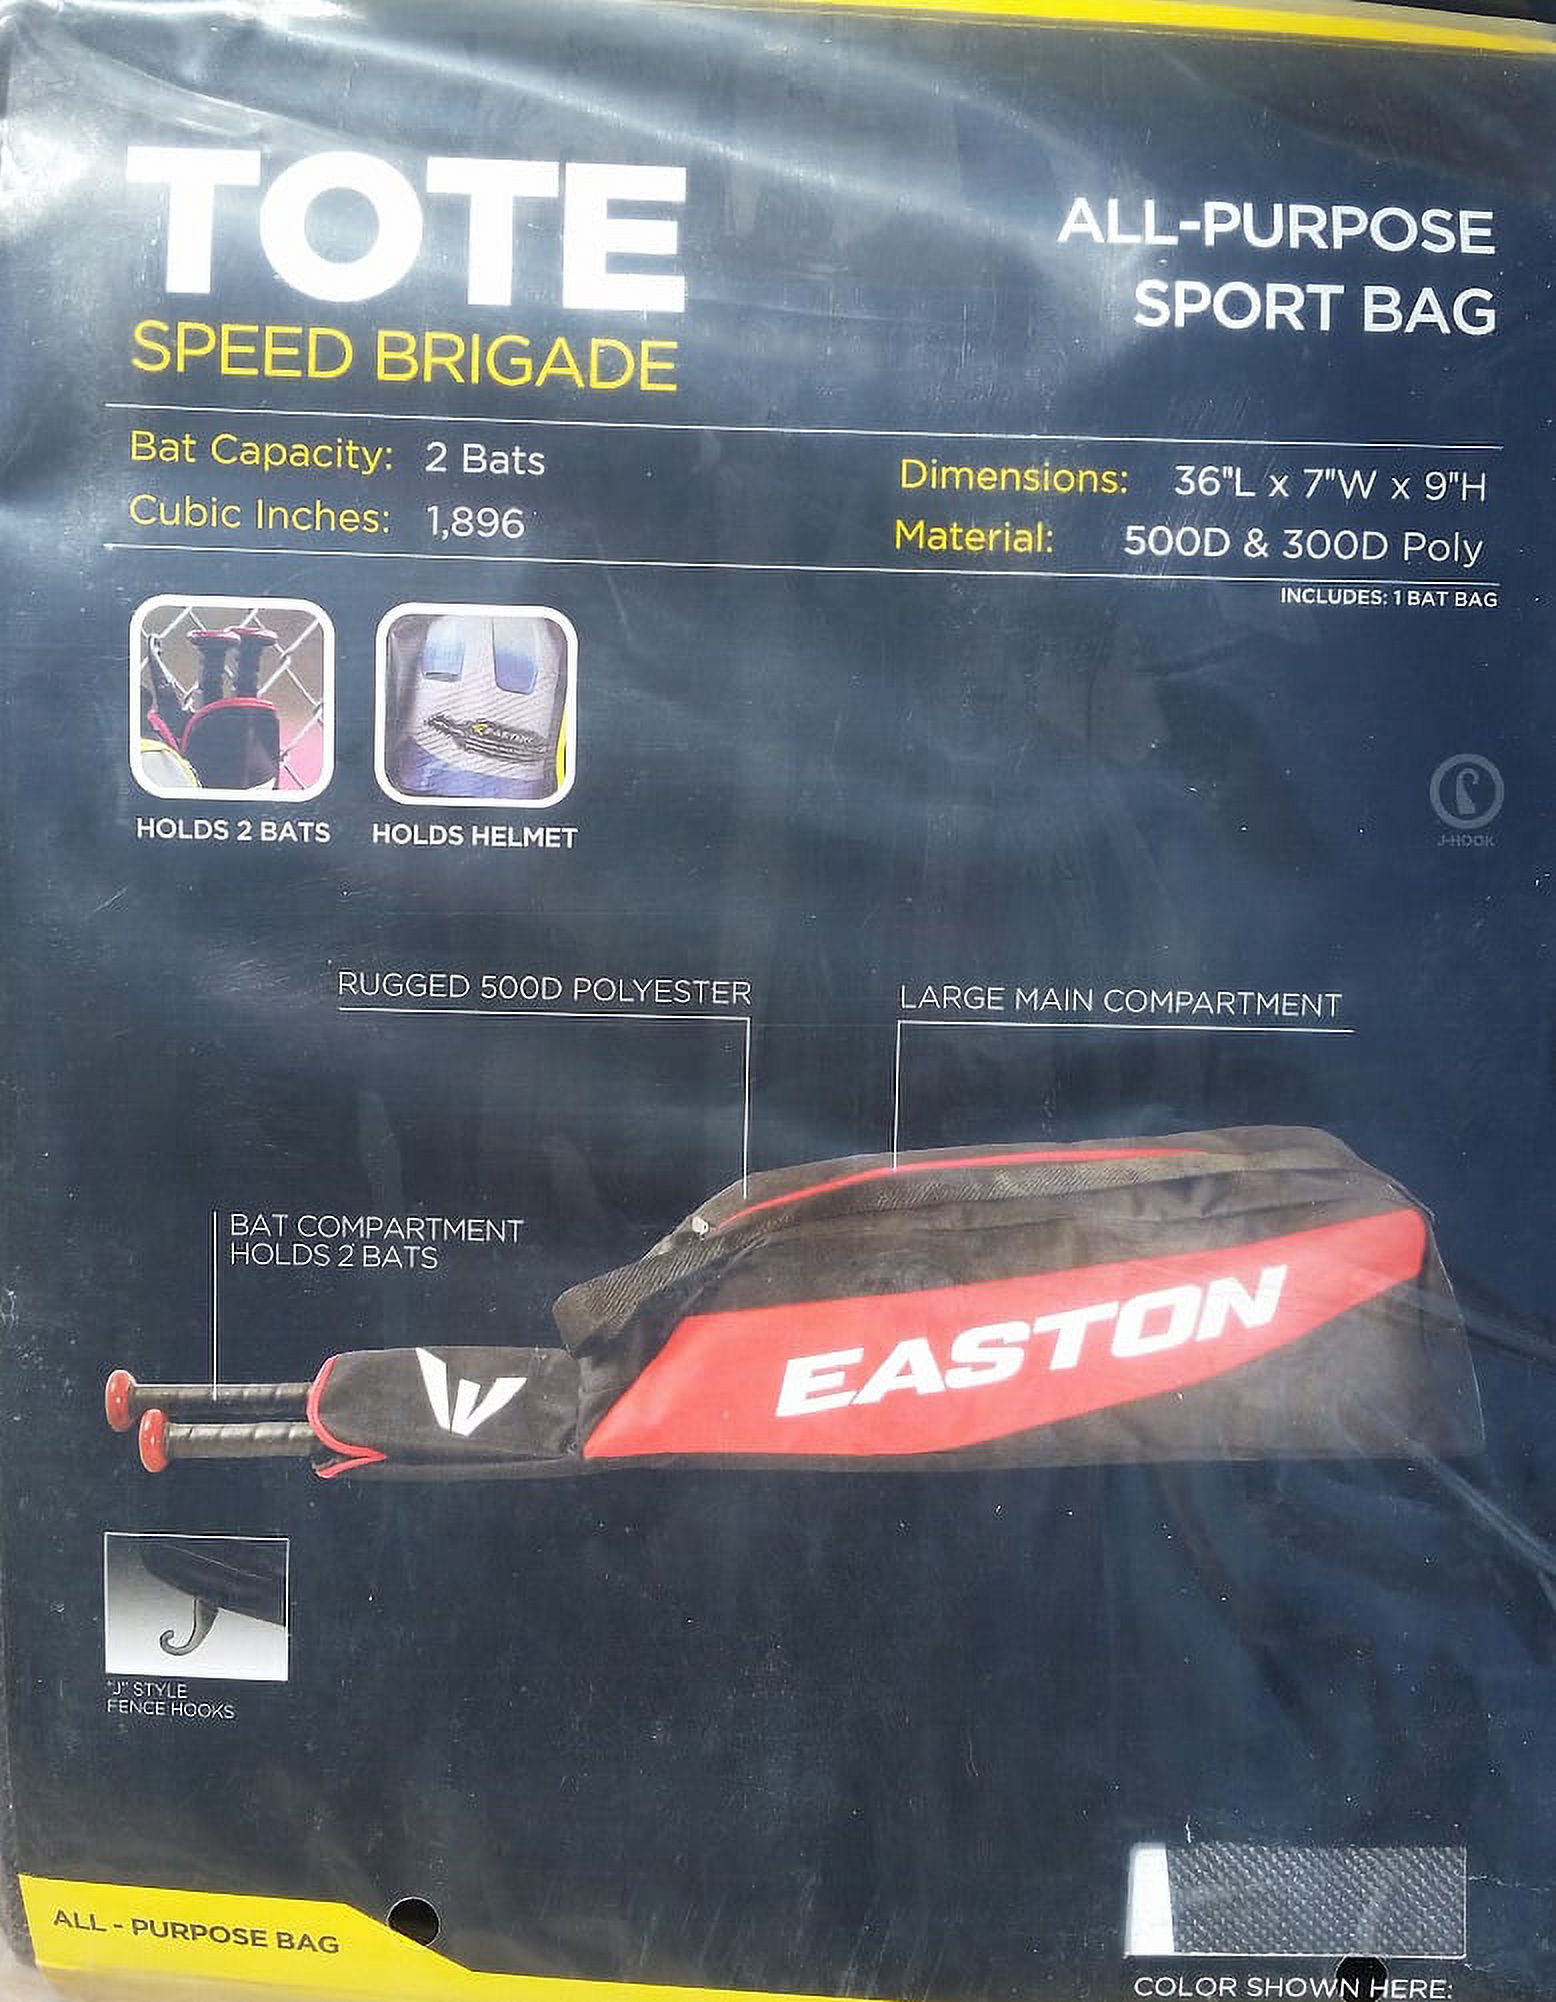 Easton Baseball Tote Bag, Black - image 2 of 2